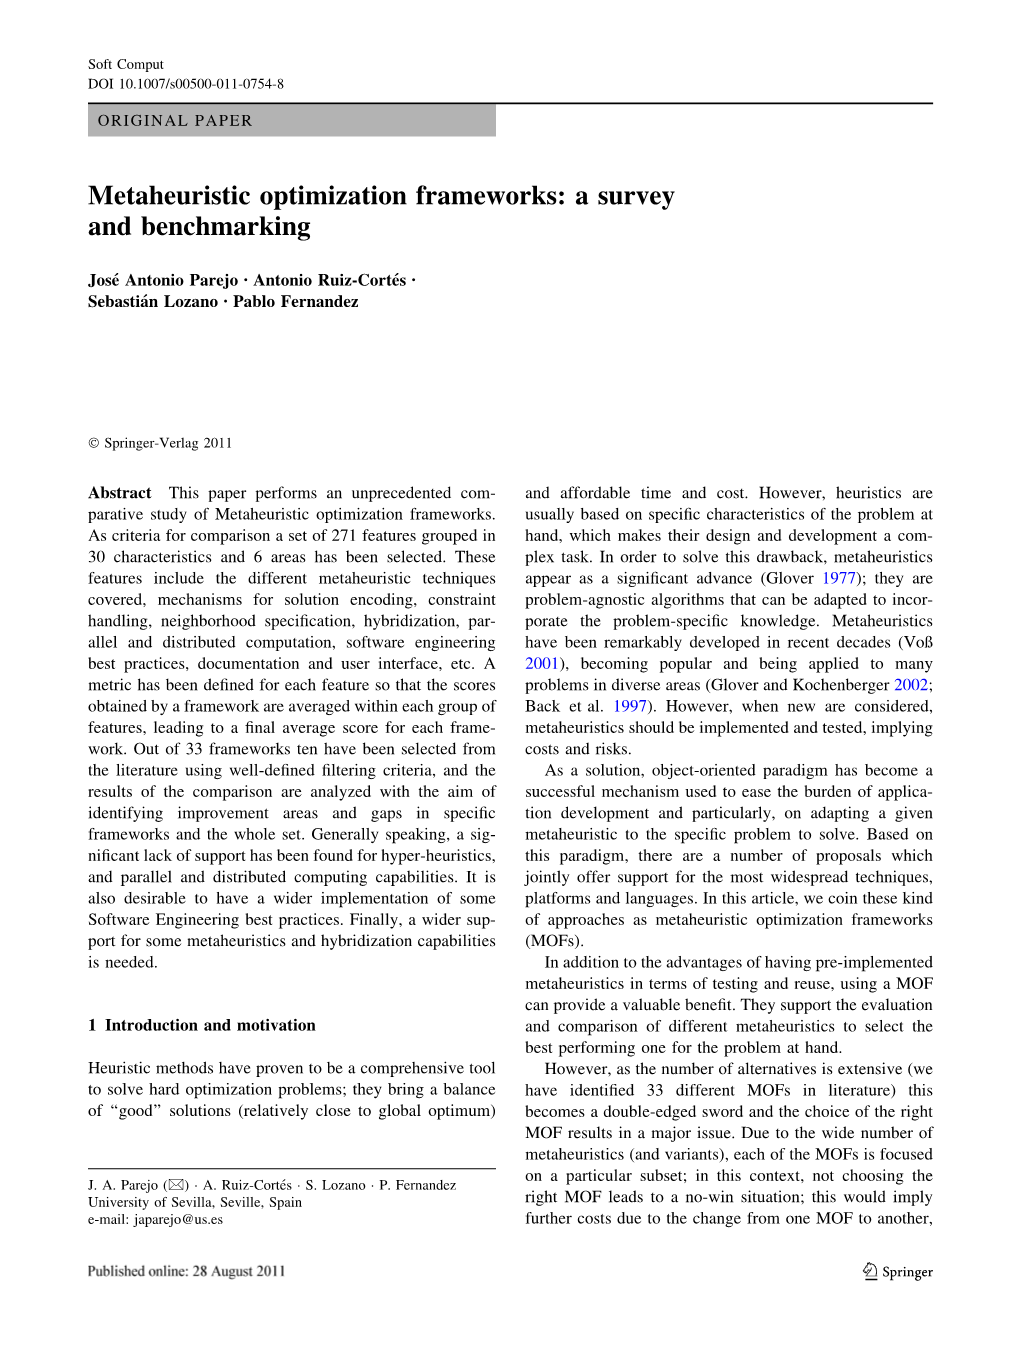 Metaheuristic Optimization Frameworks: a Survey and Benchmarking